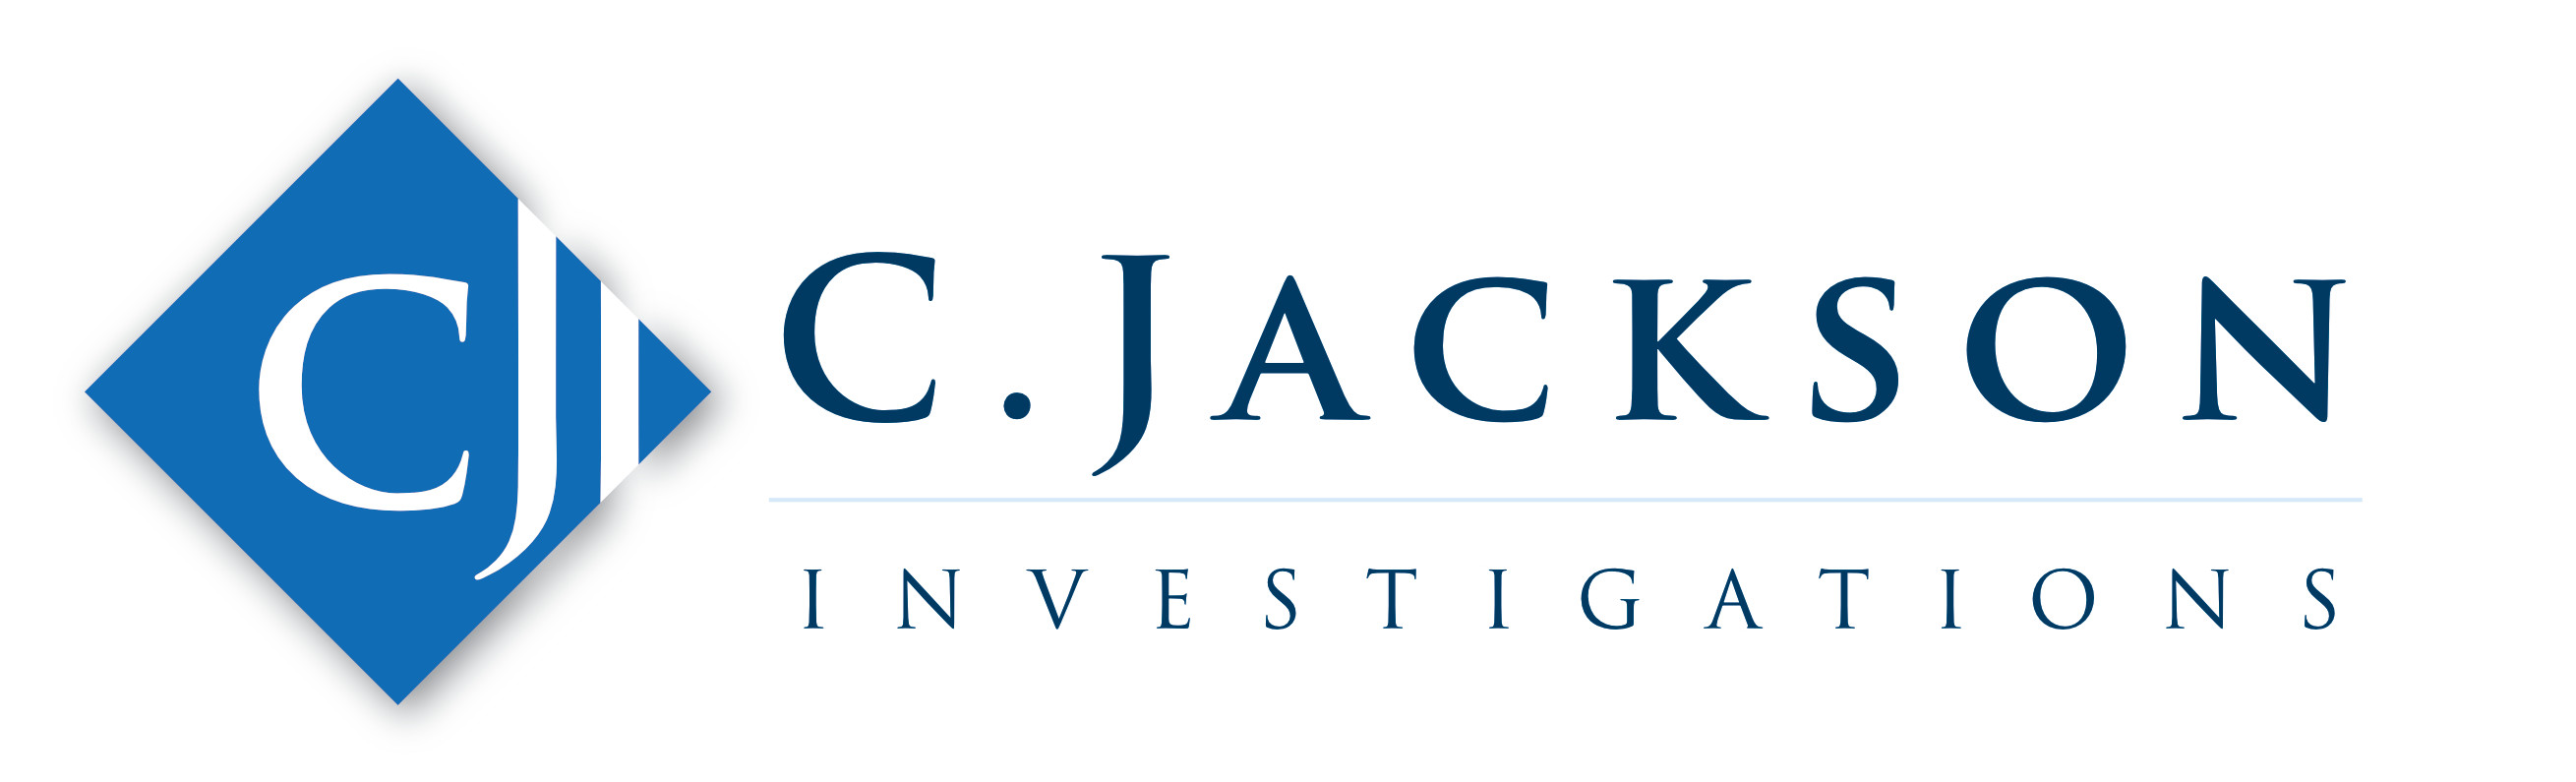 C. Jackson Investigation